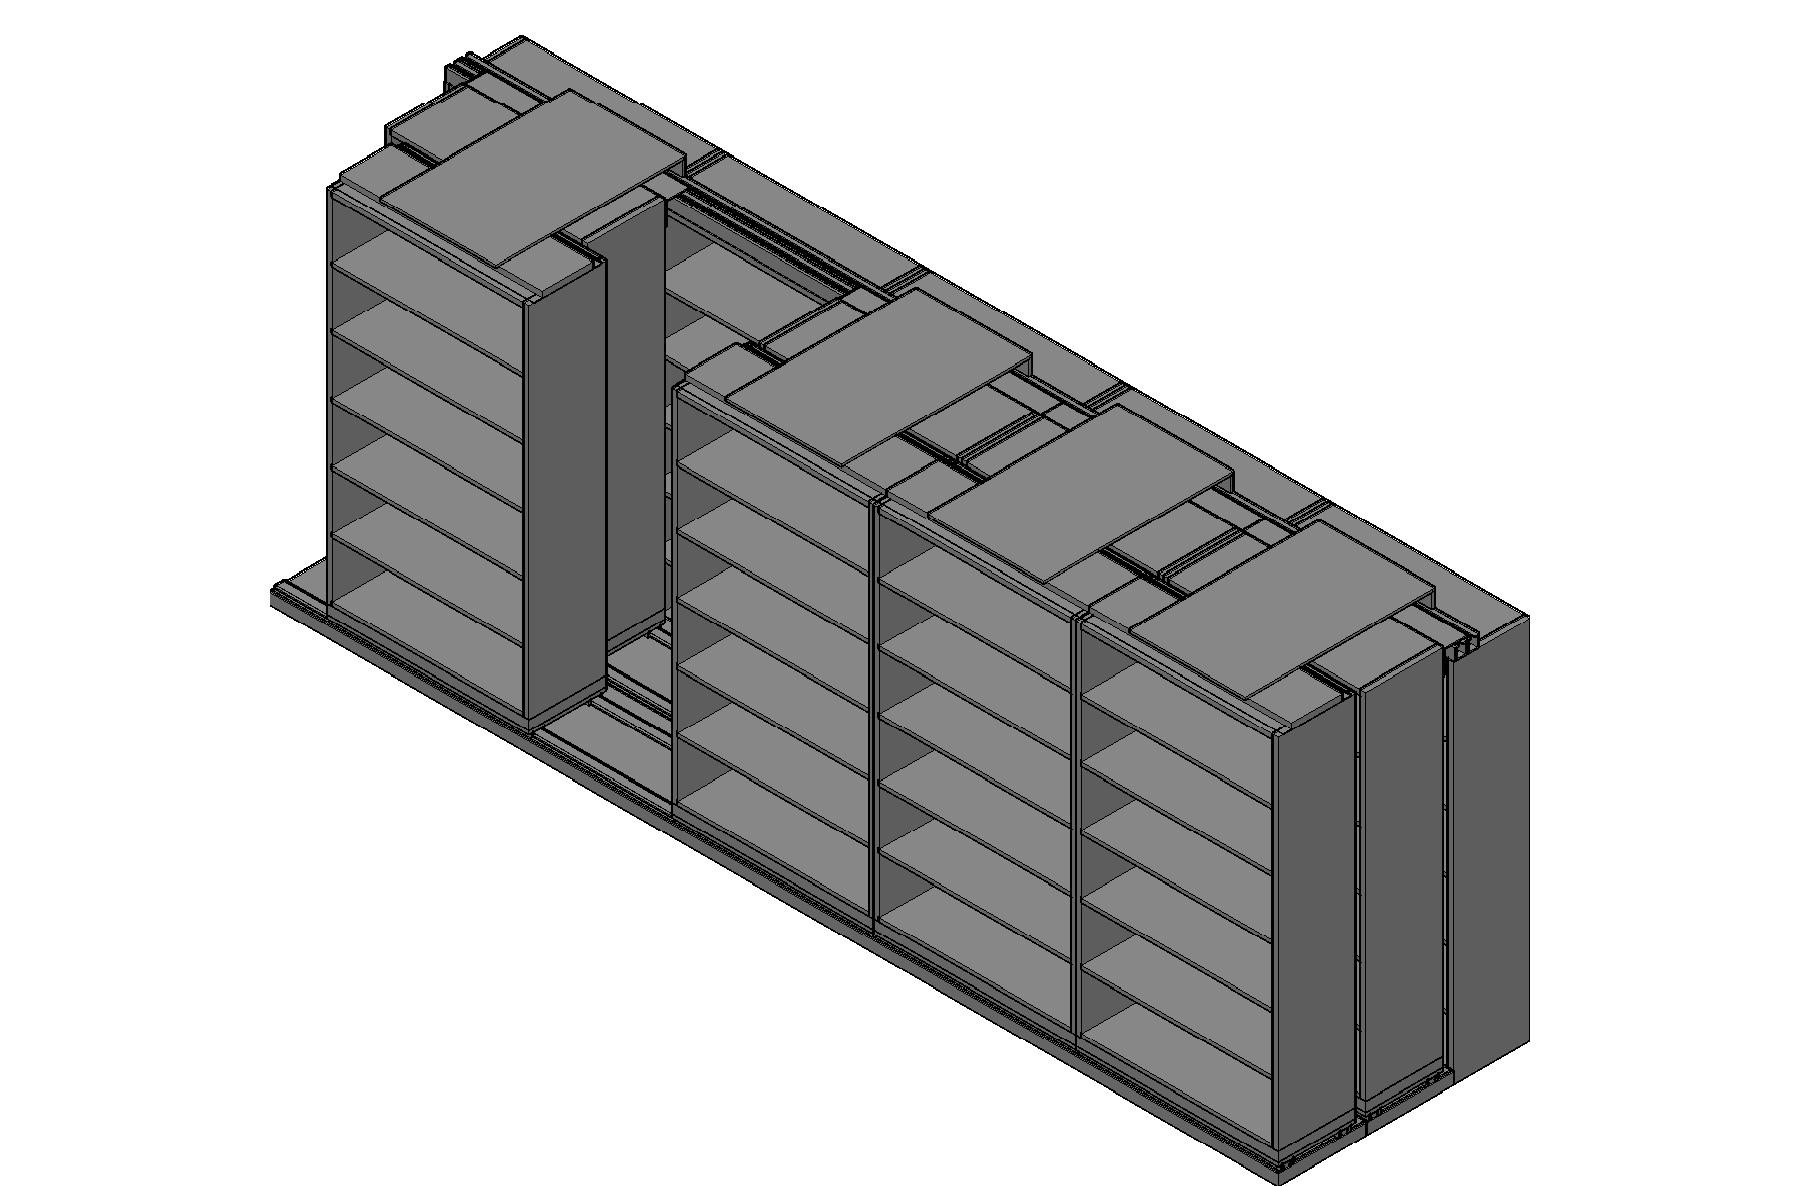 Box Size Sliding Shelves - 3 Rows Deep - 6 Levels - (42" x 16" Shelves) - 214" Total Width